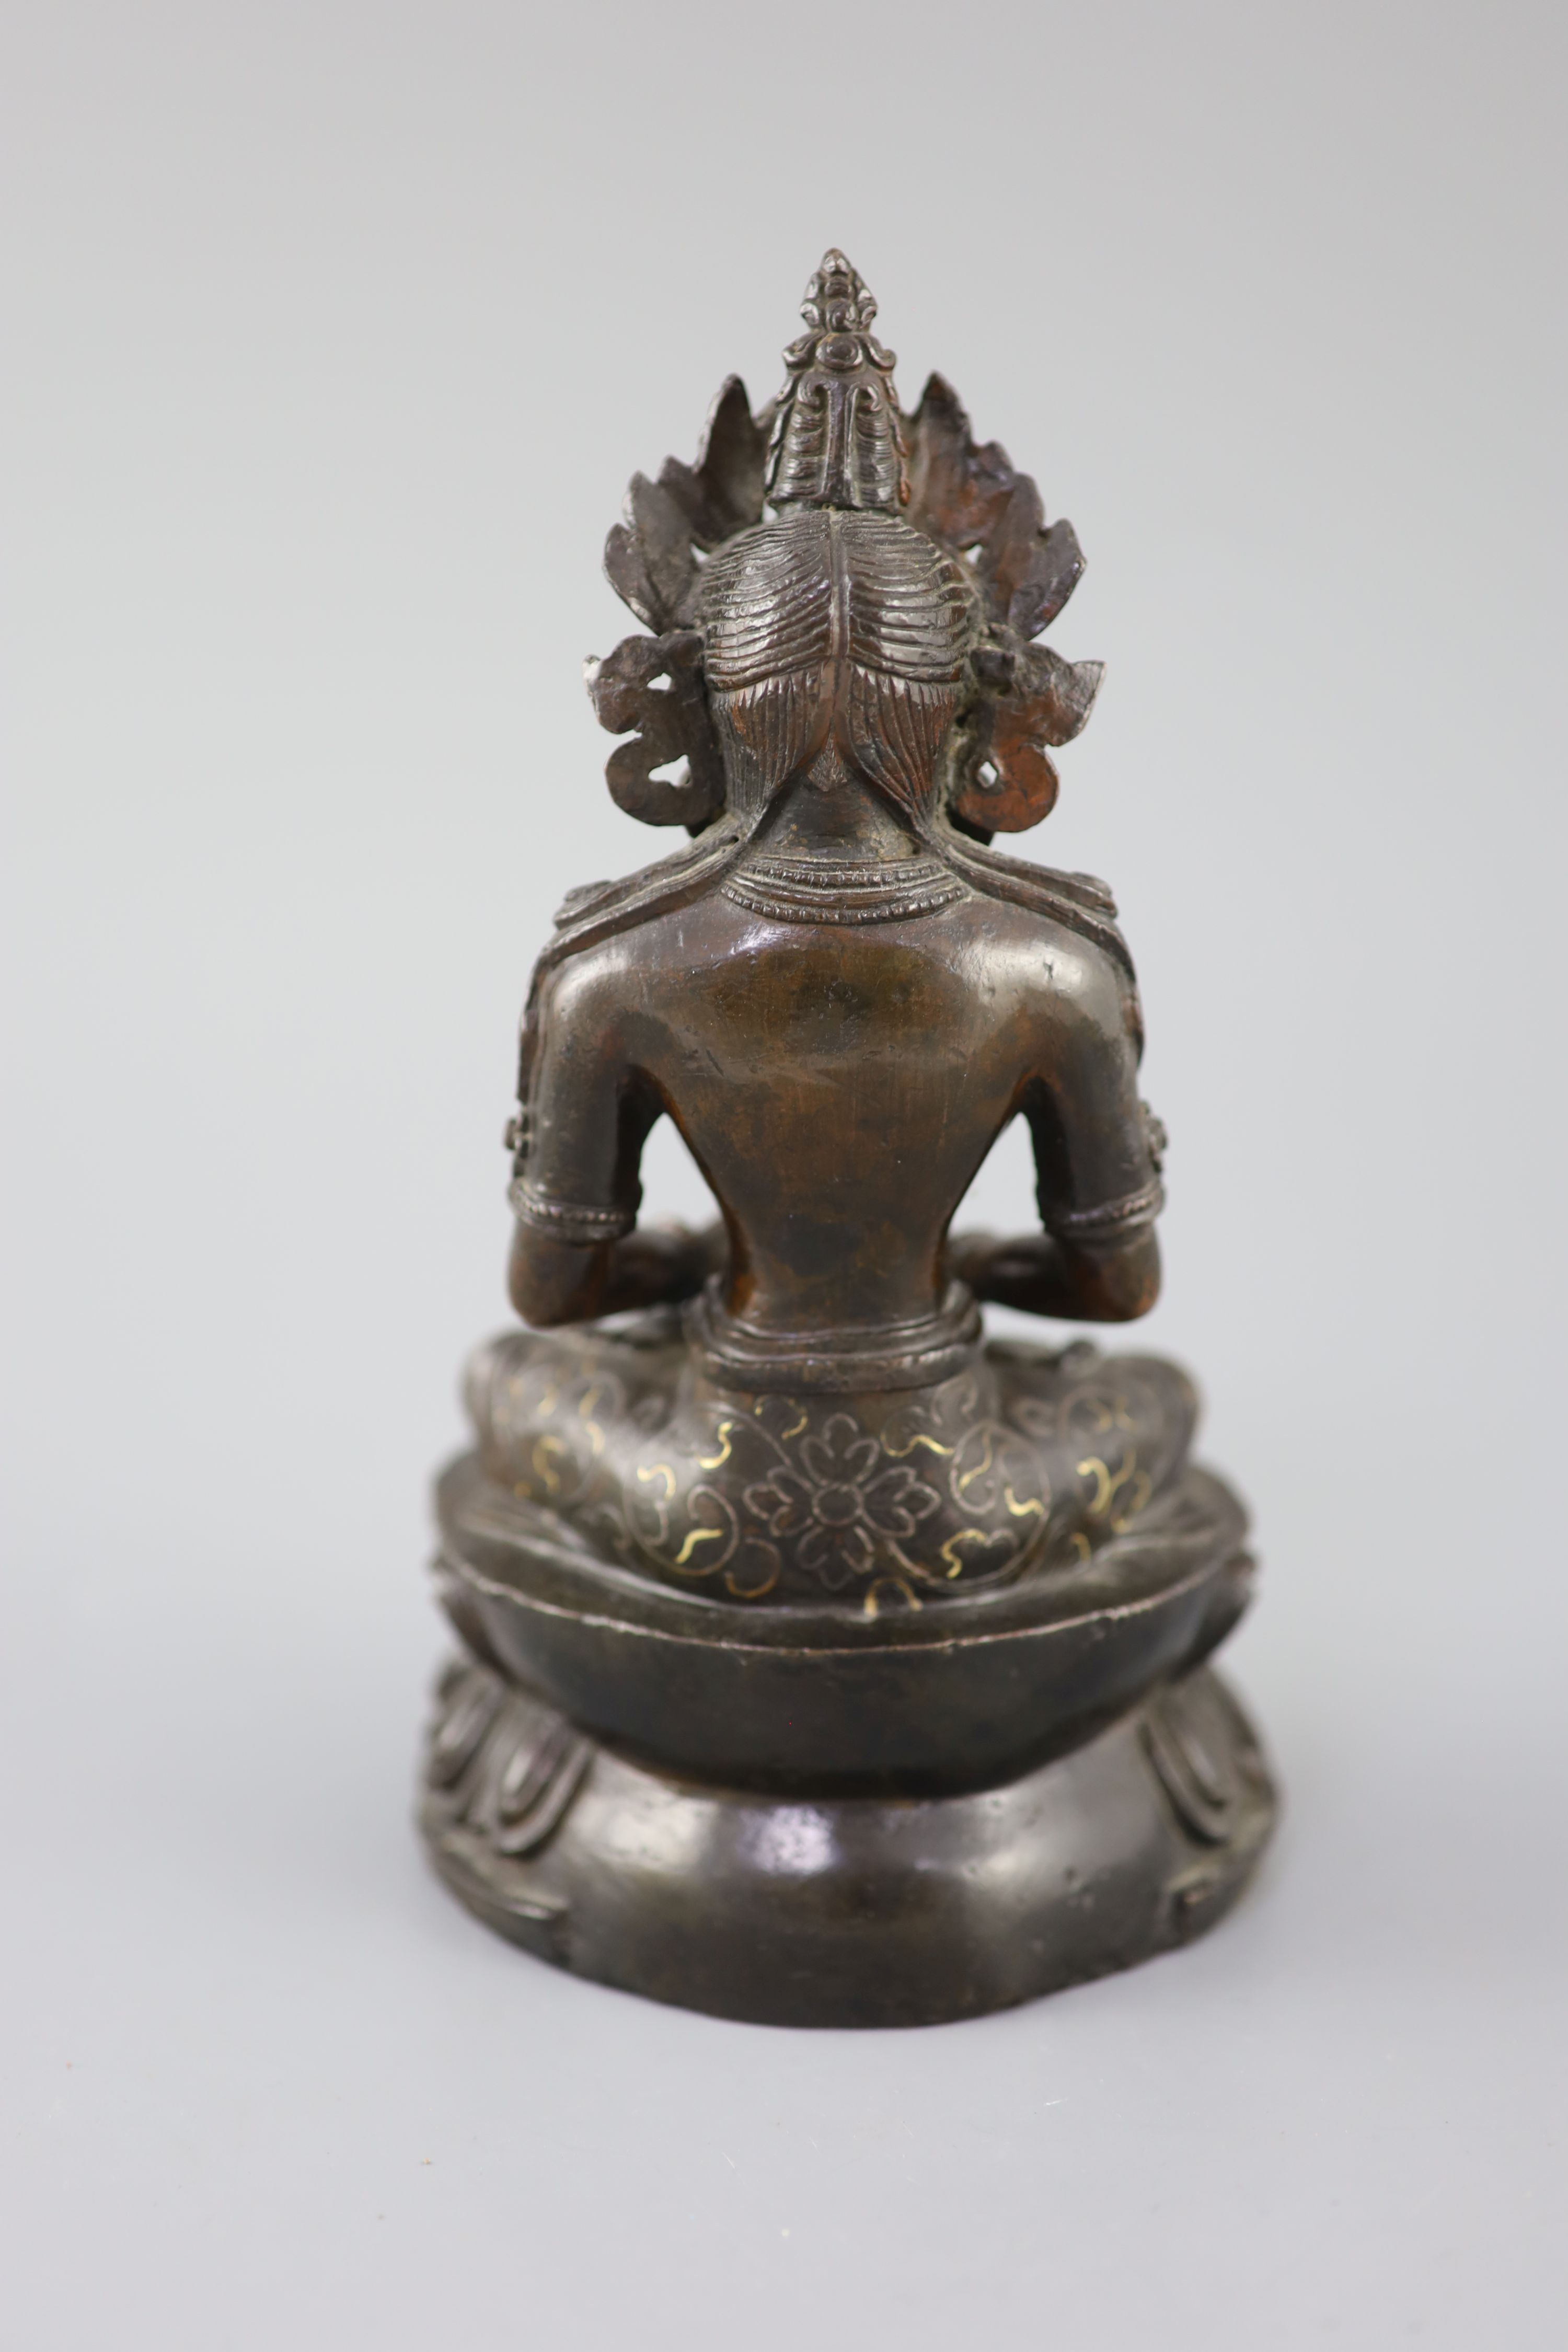 A Tibetan silver and gold inlaid copper alloy figure of Amitayus/Amitabha, c.15th century, 20.5cm high